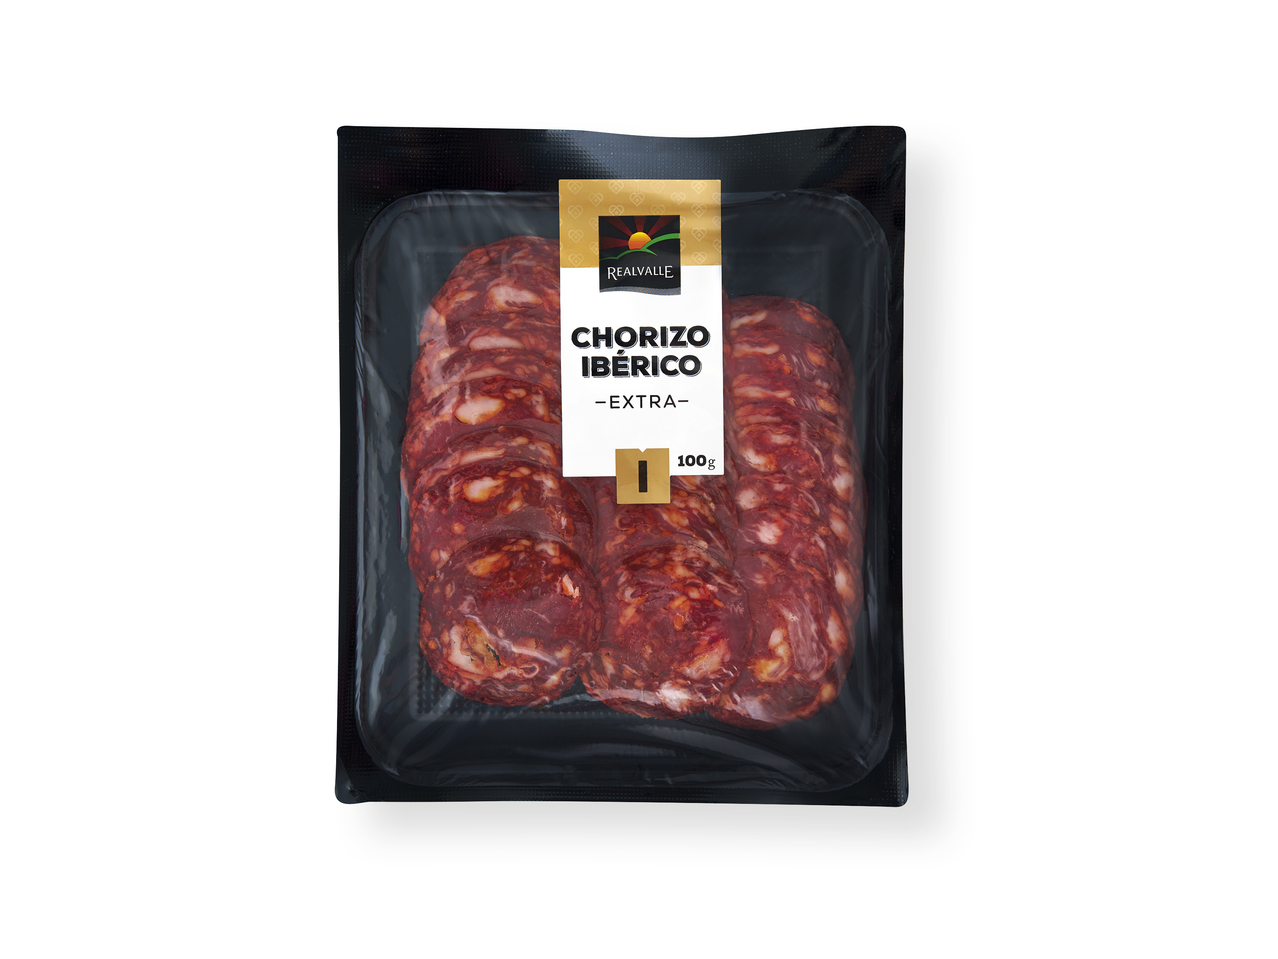 'Realvalle(R)' Salchichón / Chorizo ibérico extra